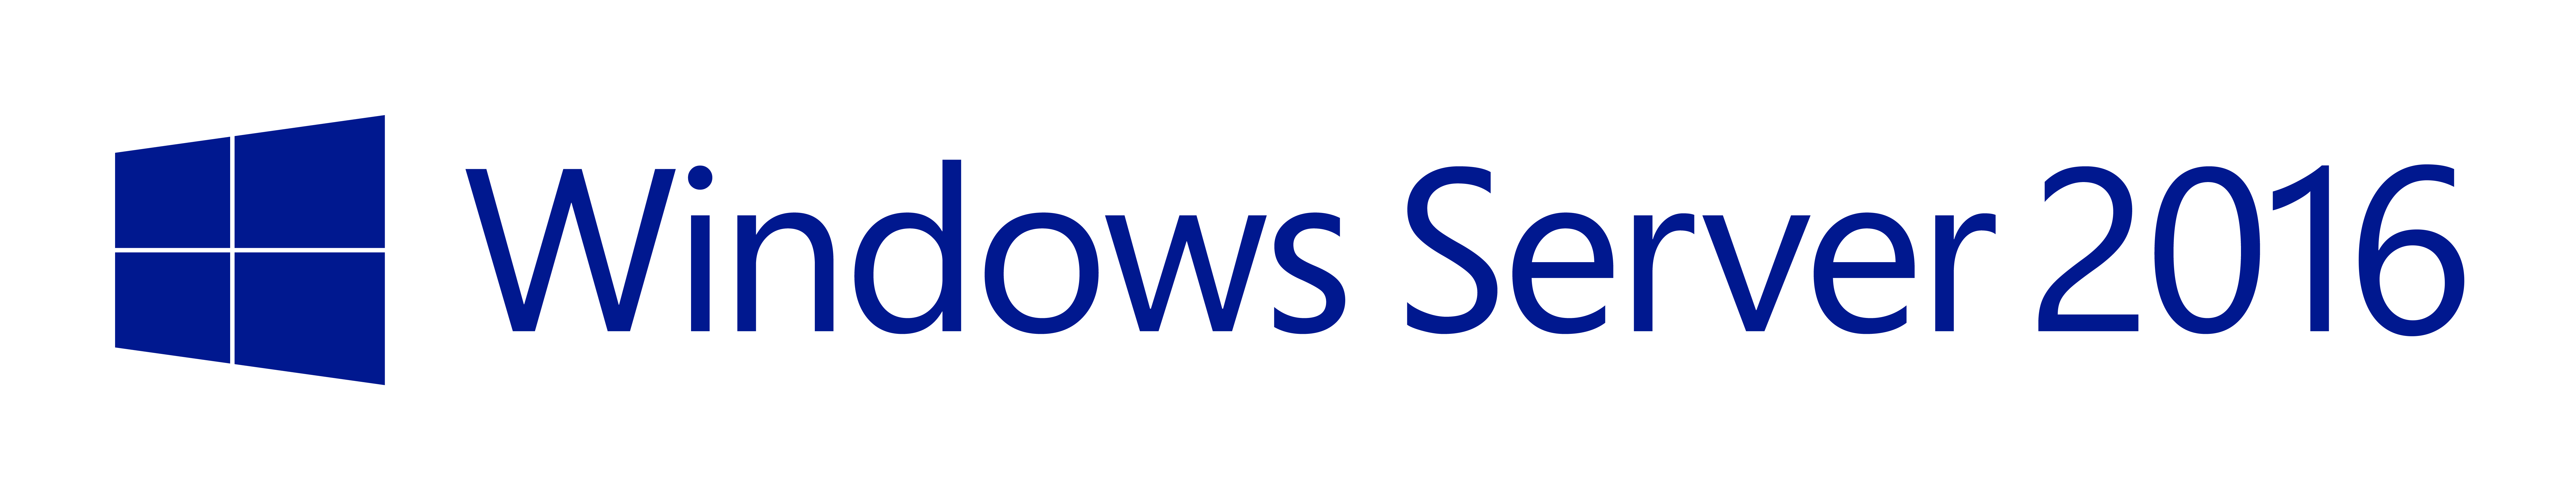 Blue Server Logo - File:Windows-server-2016.png - Wikimedia Commons